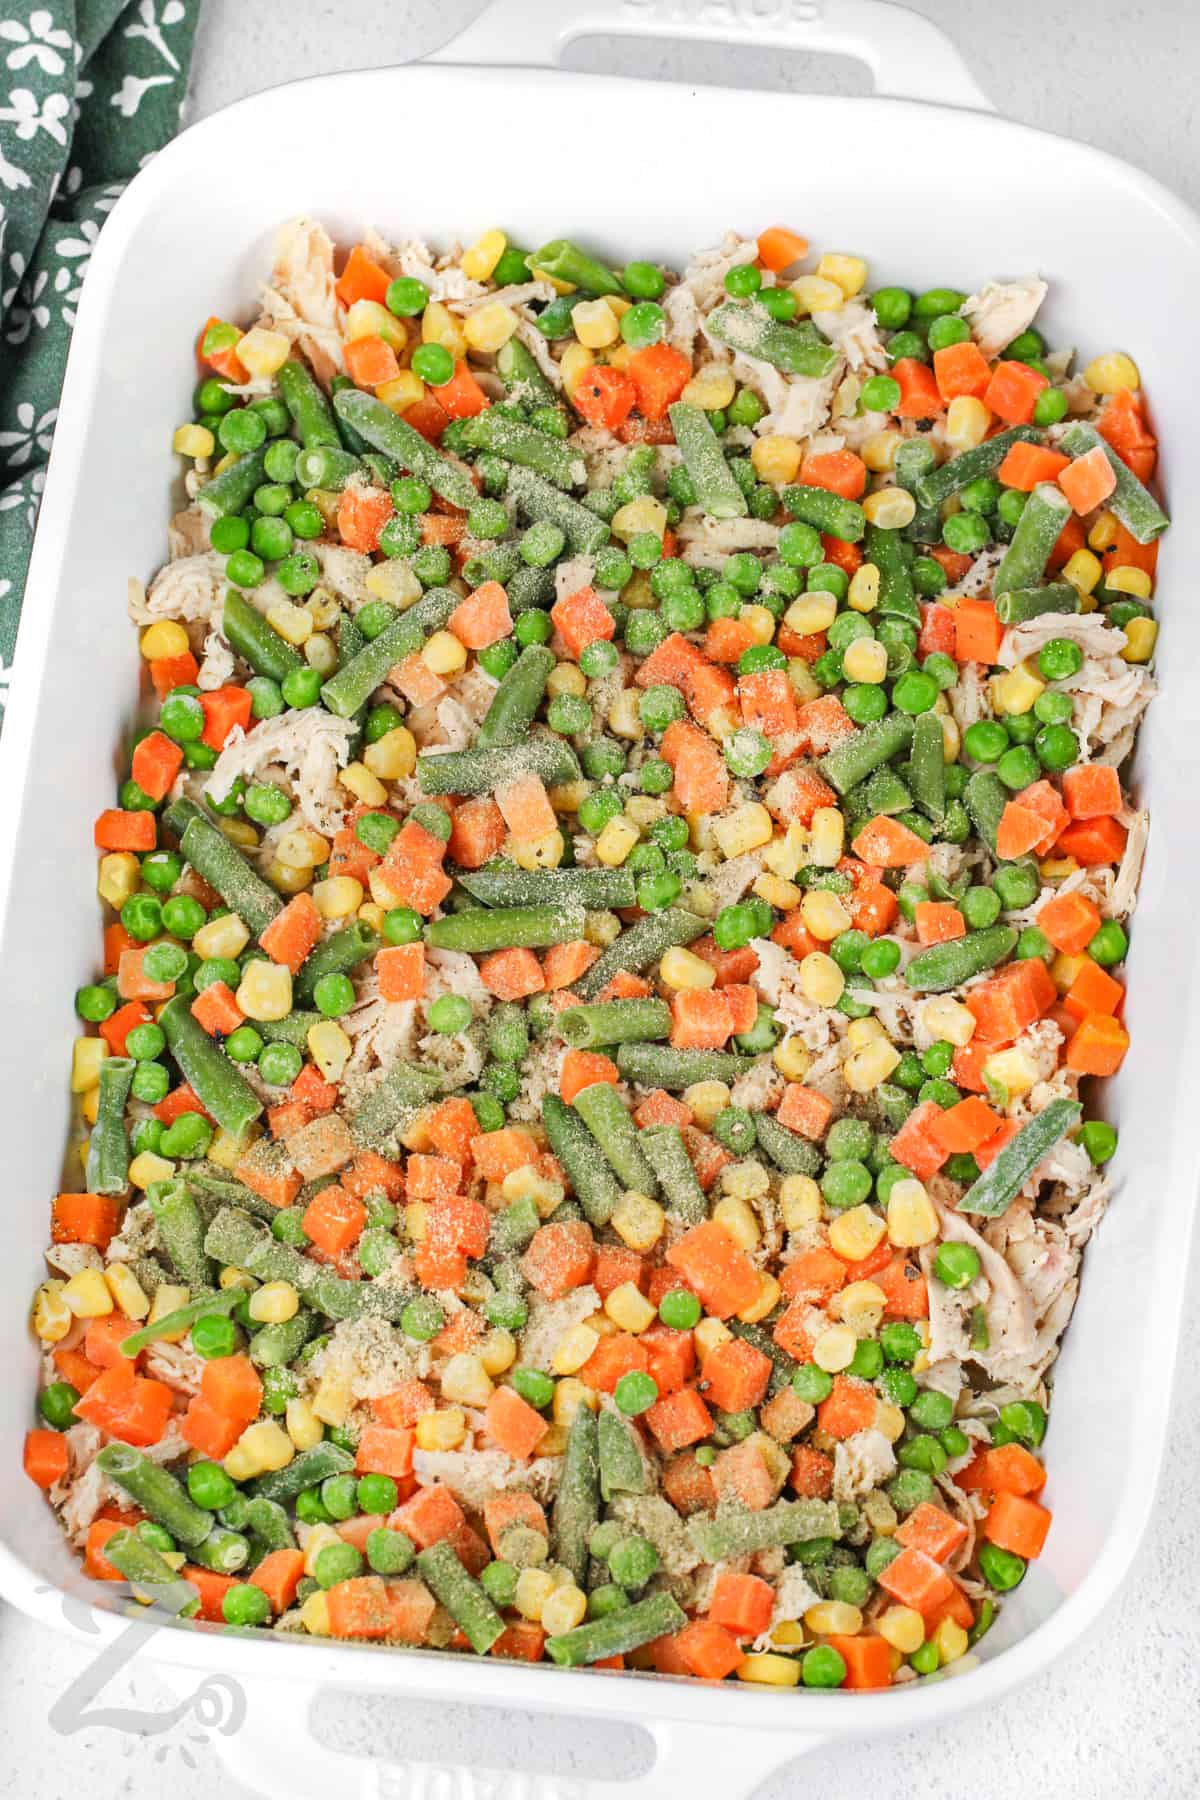 frozen veggies spread over shredded chicken in a casserole dish